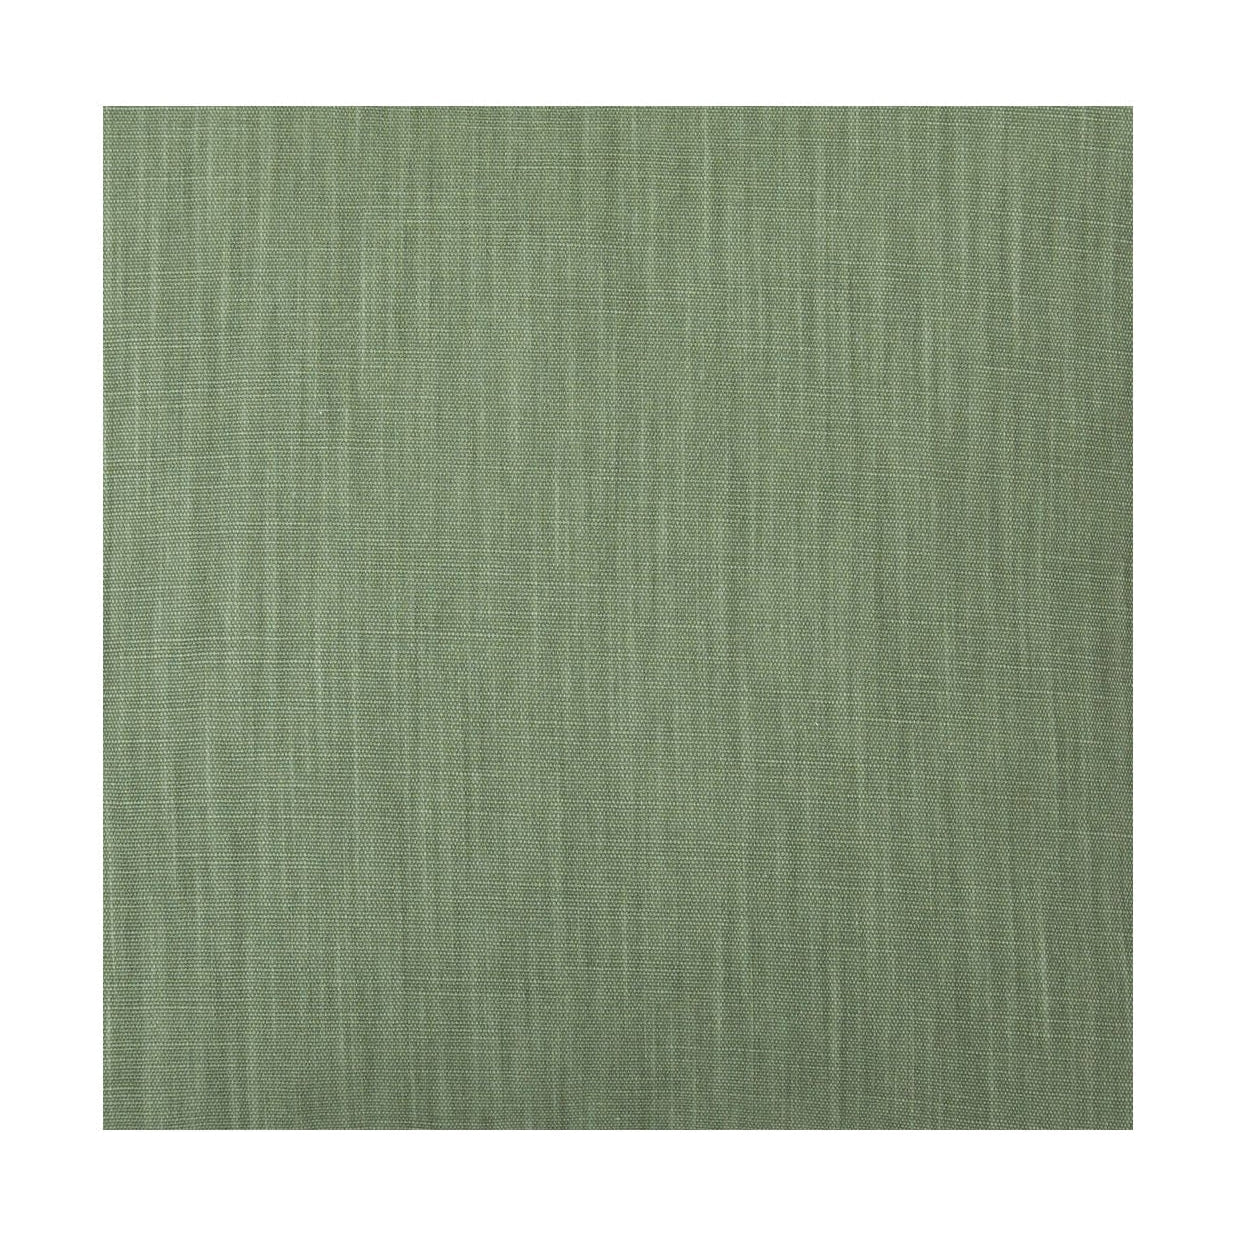 Spira Klotz Fabric Width 150 Cm (Price Per Meter), Sage Green